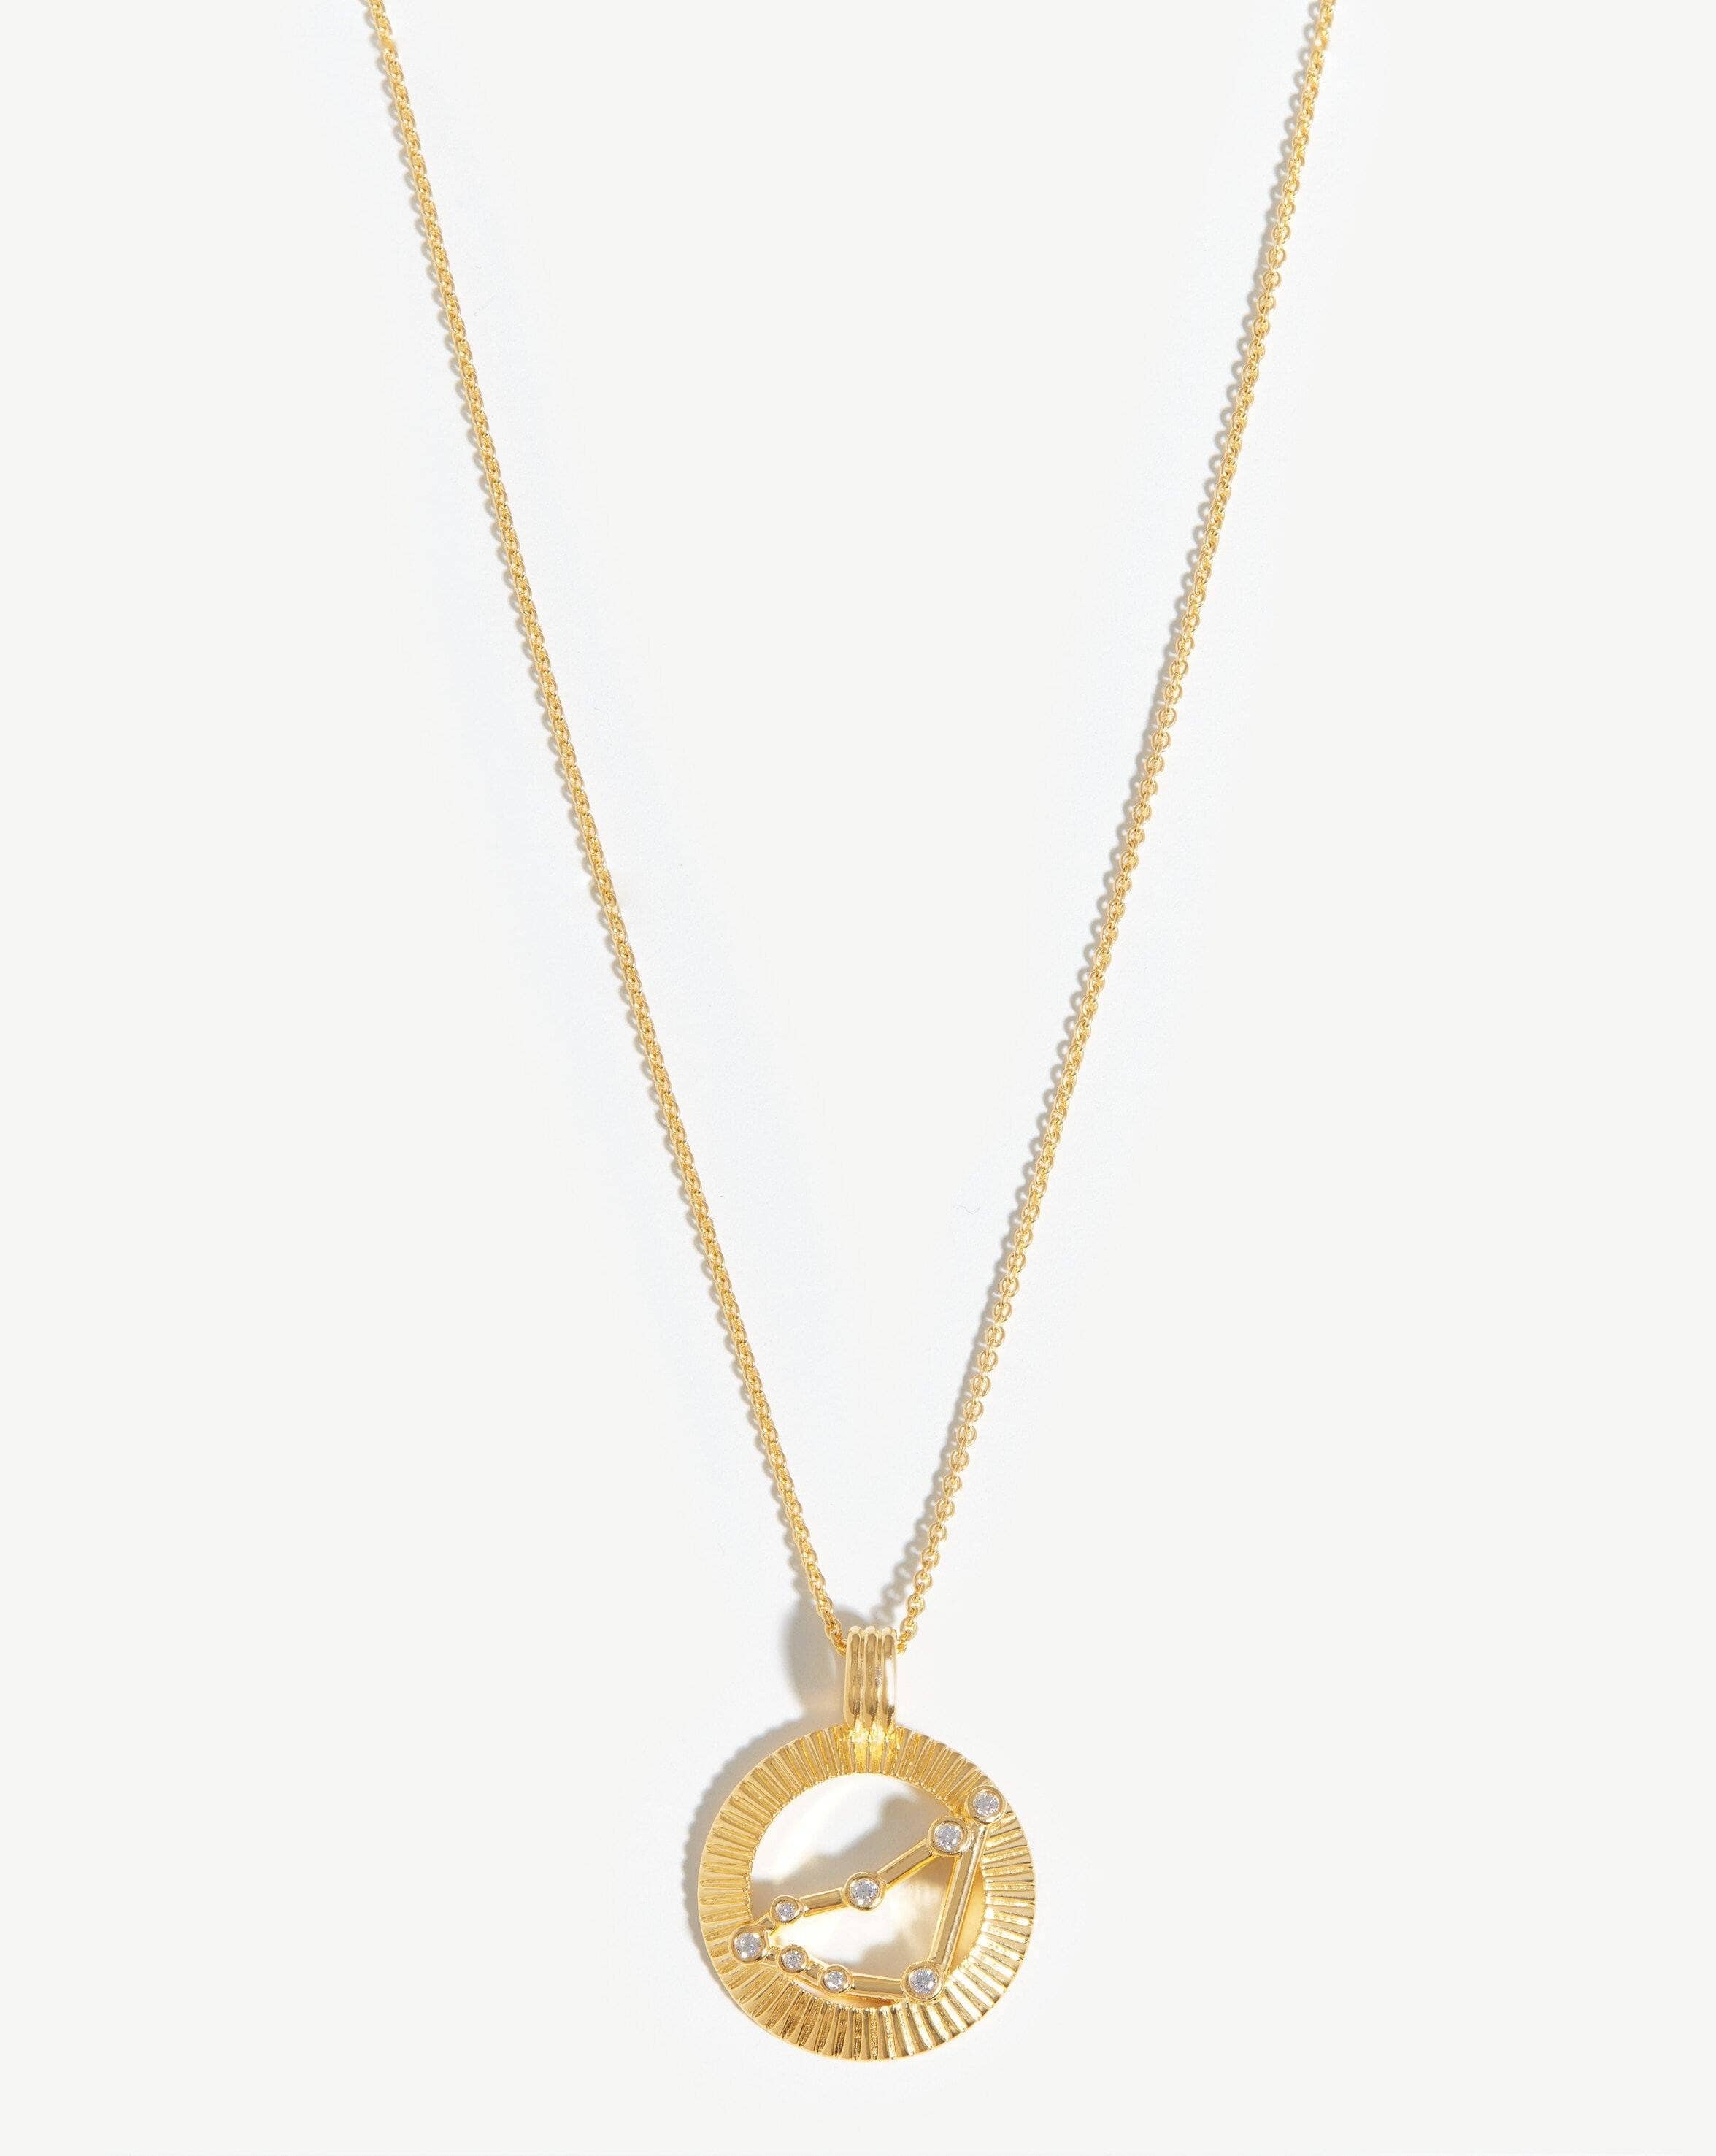 Zodiac Constellation Pendant Necklace - Capricorn| 18ct Gold Plated Vermeil/Capricorn Necklaces Missoma 